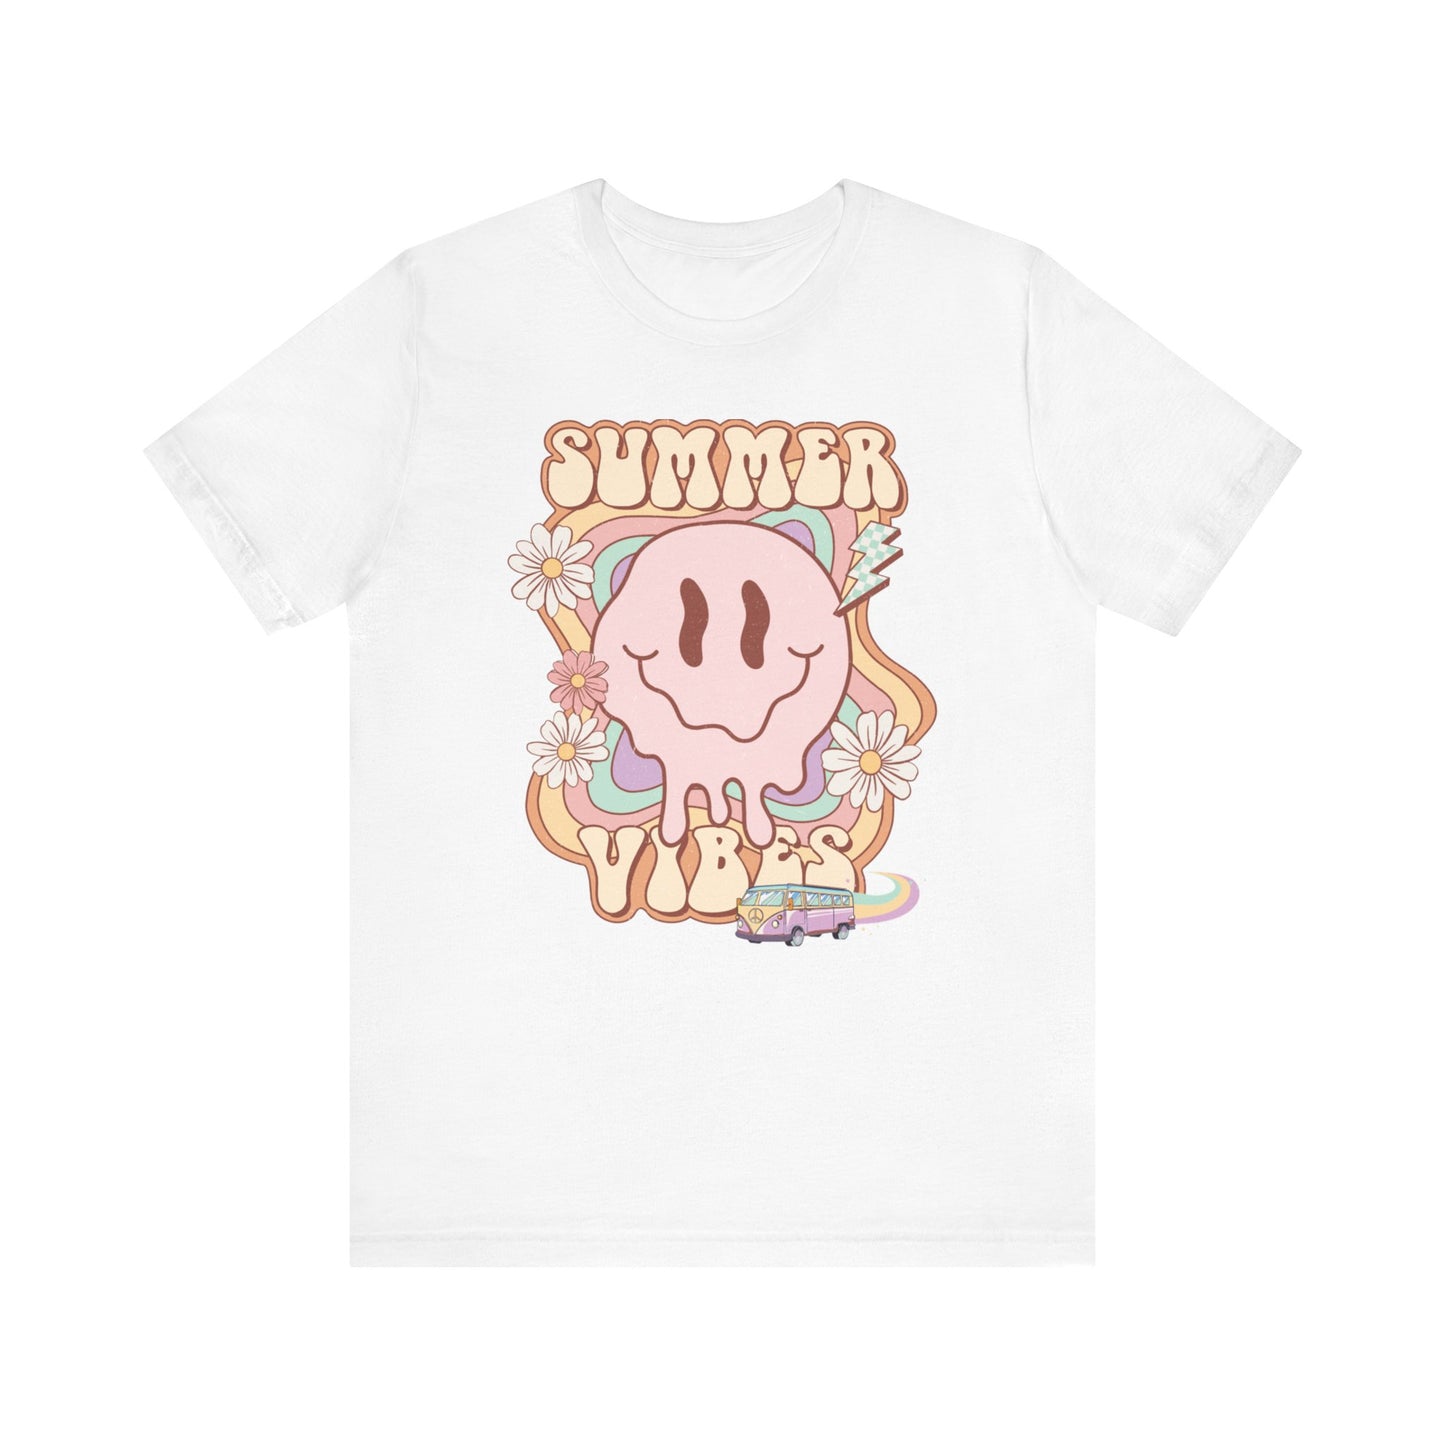 Cute Summer Vibes T-Shirt, Cartoon Sun and Flowers, Casual Beachwear Tee, Pastel Colors, Unisex Graphic Shirt, Retro Van